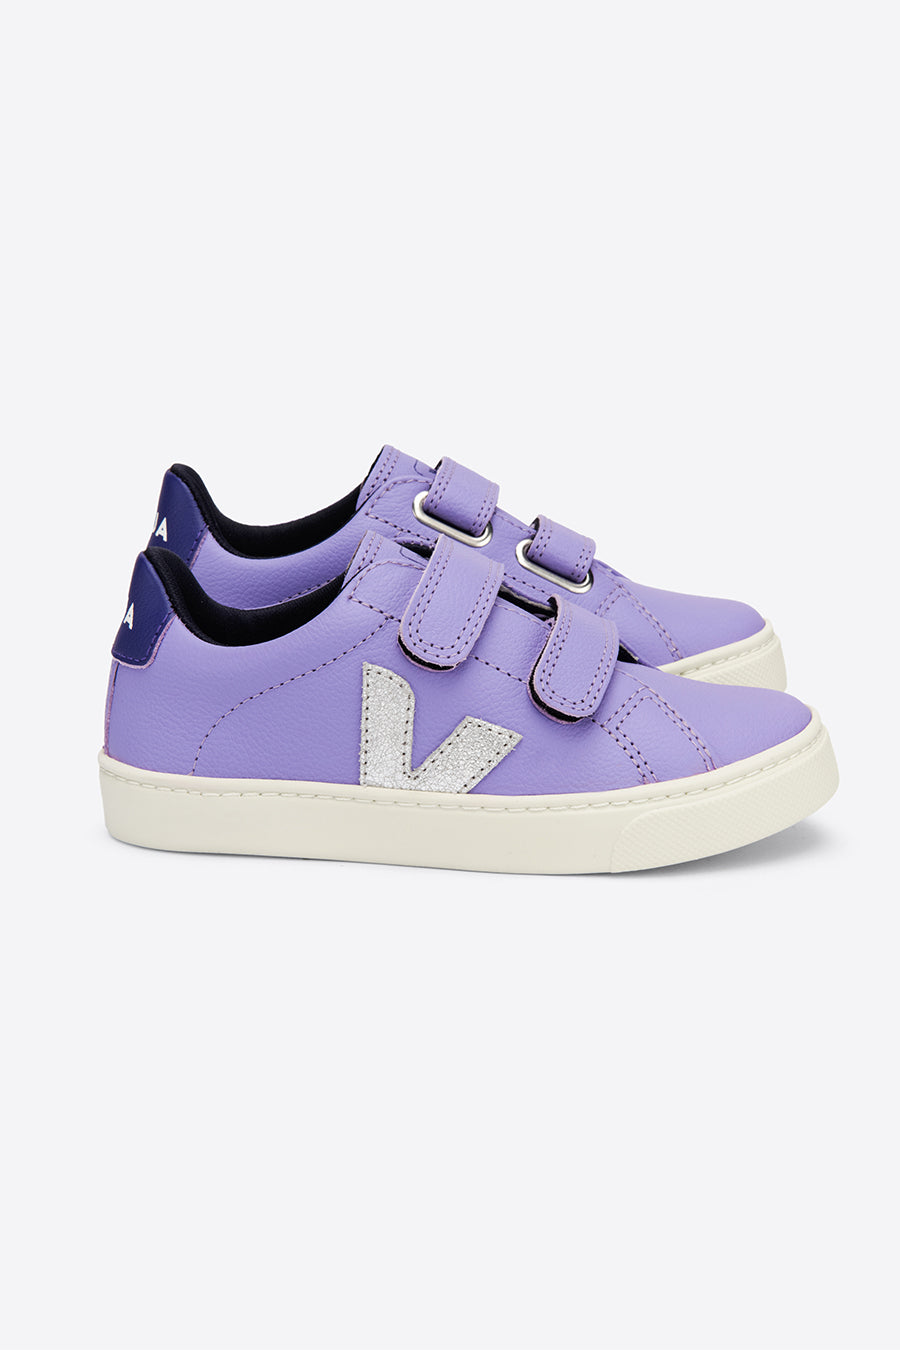 Veja Esplar Velcro Kids Shoes Solid Lavender – Mini Ruby